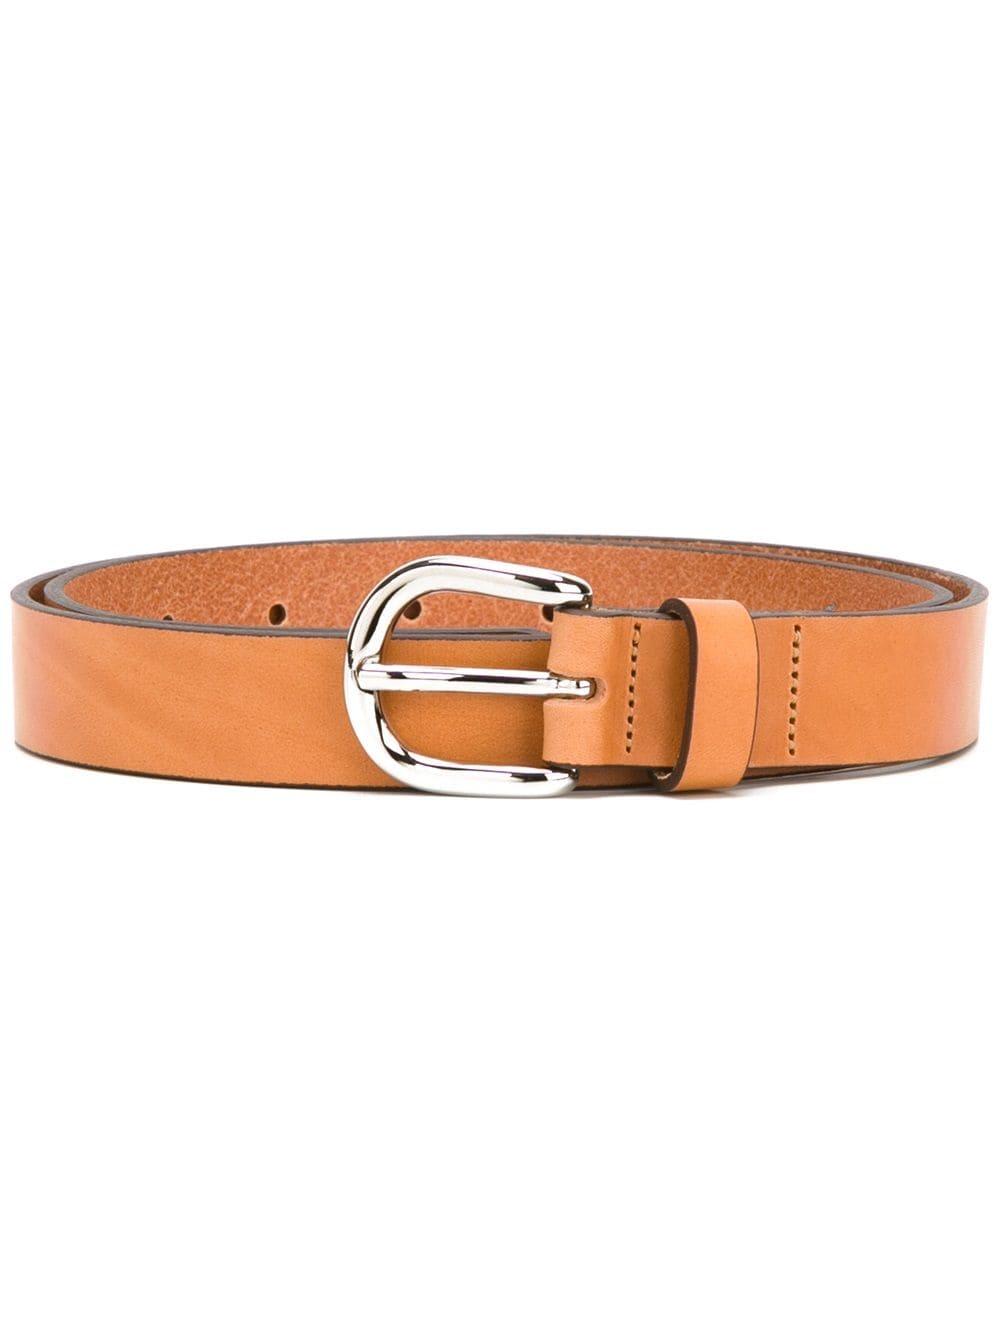 Isabel Marant Leather 'zap' Belt in Brown - Lyst